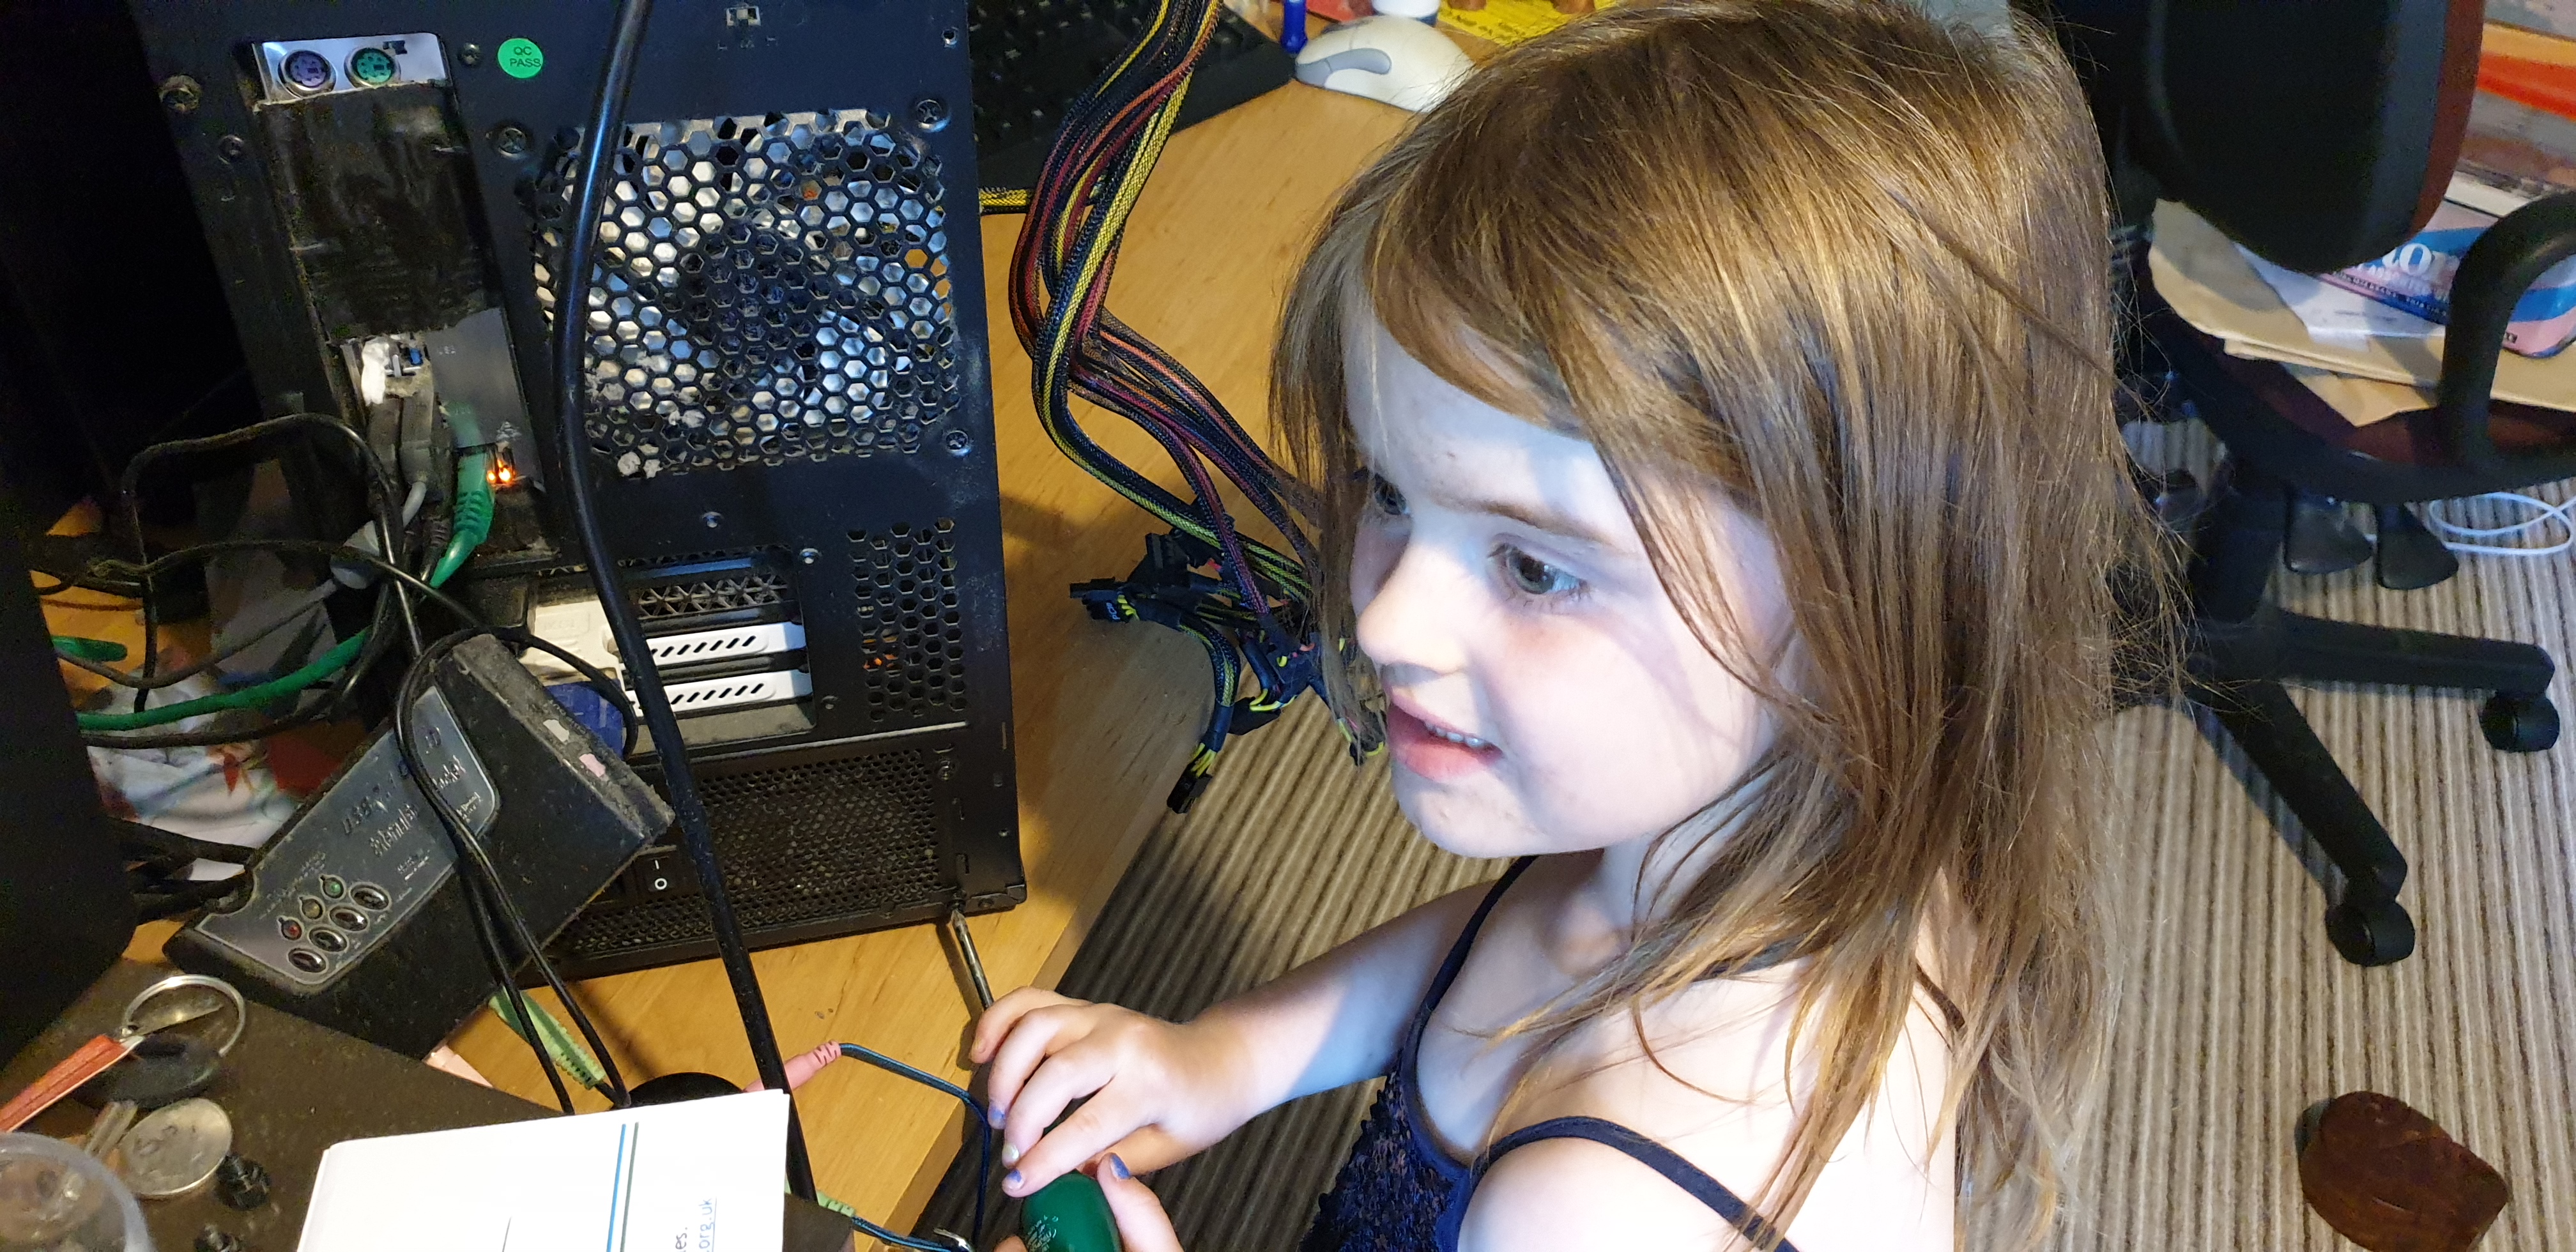 Annabel repairing her mother's computer.